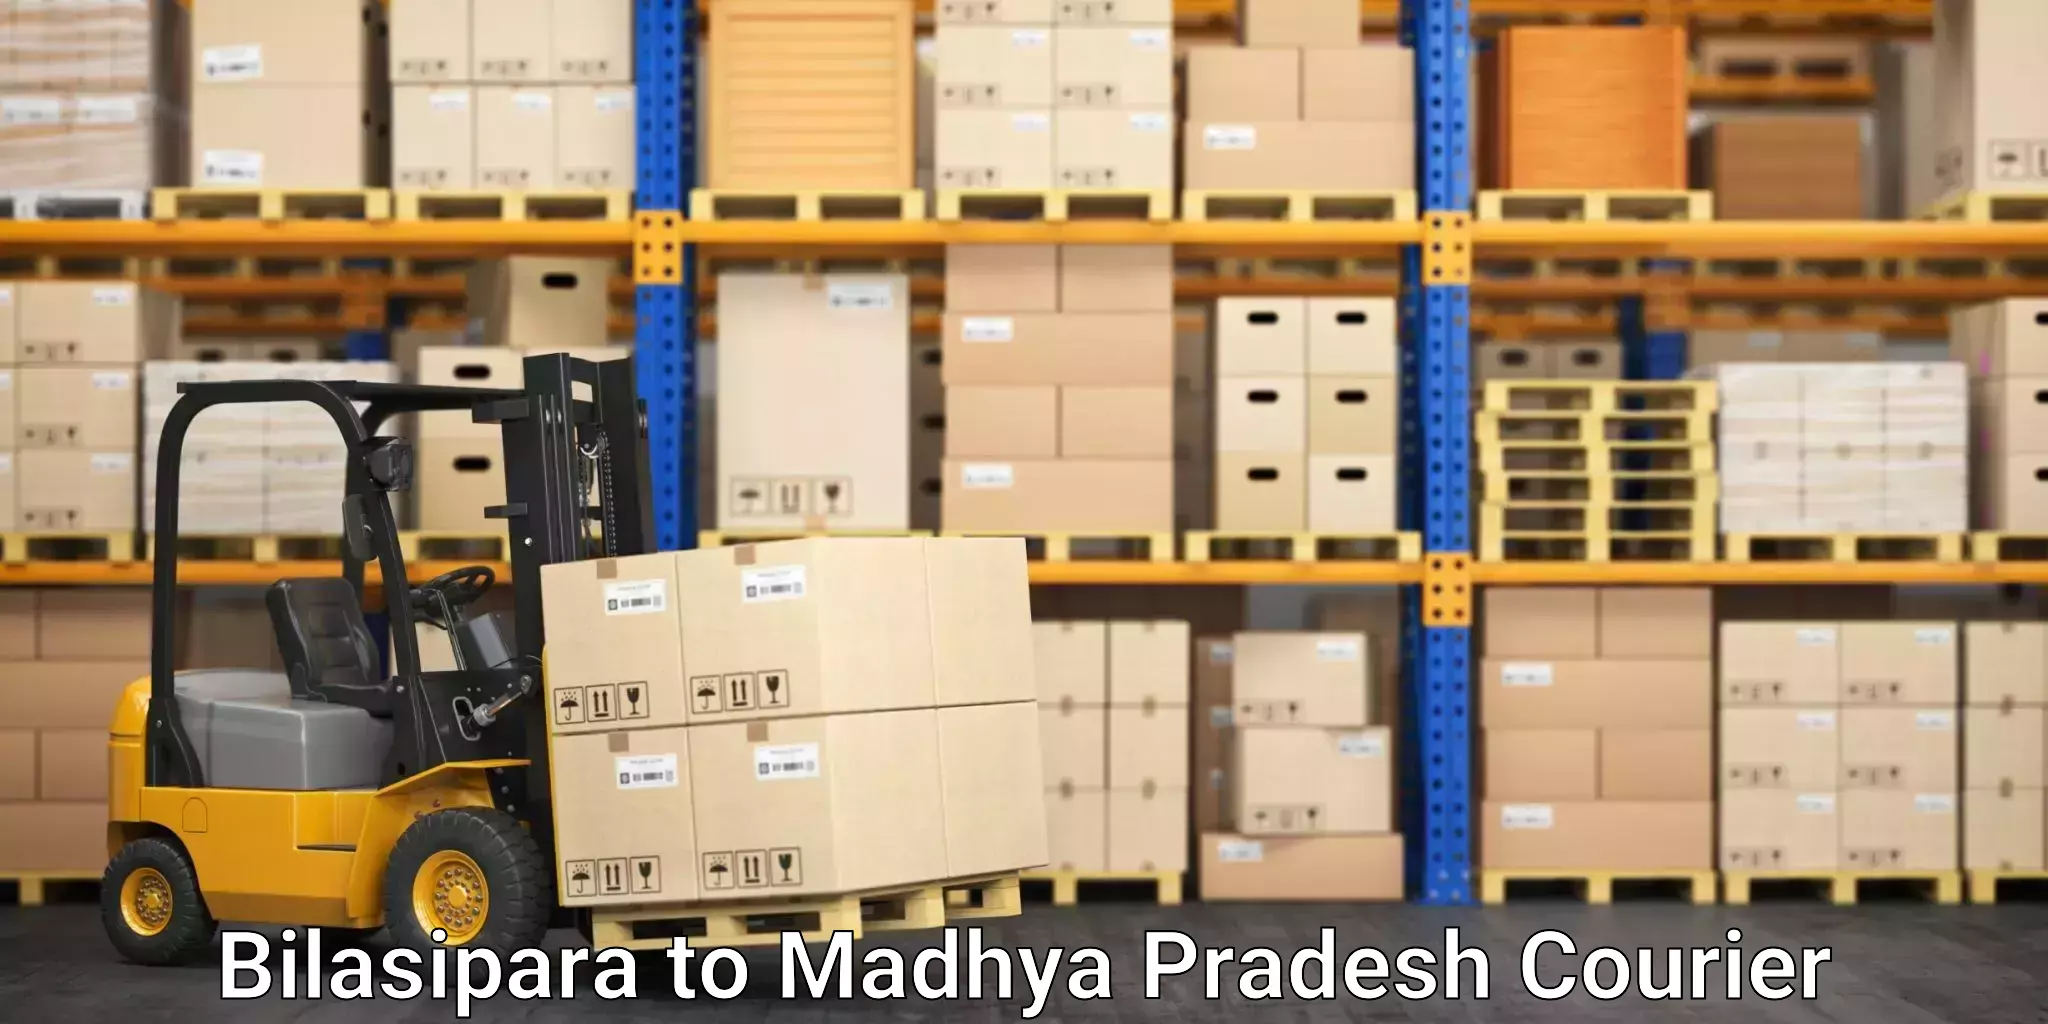 Courier service booking Bilasipara to Madhya Pradesh